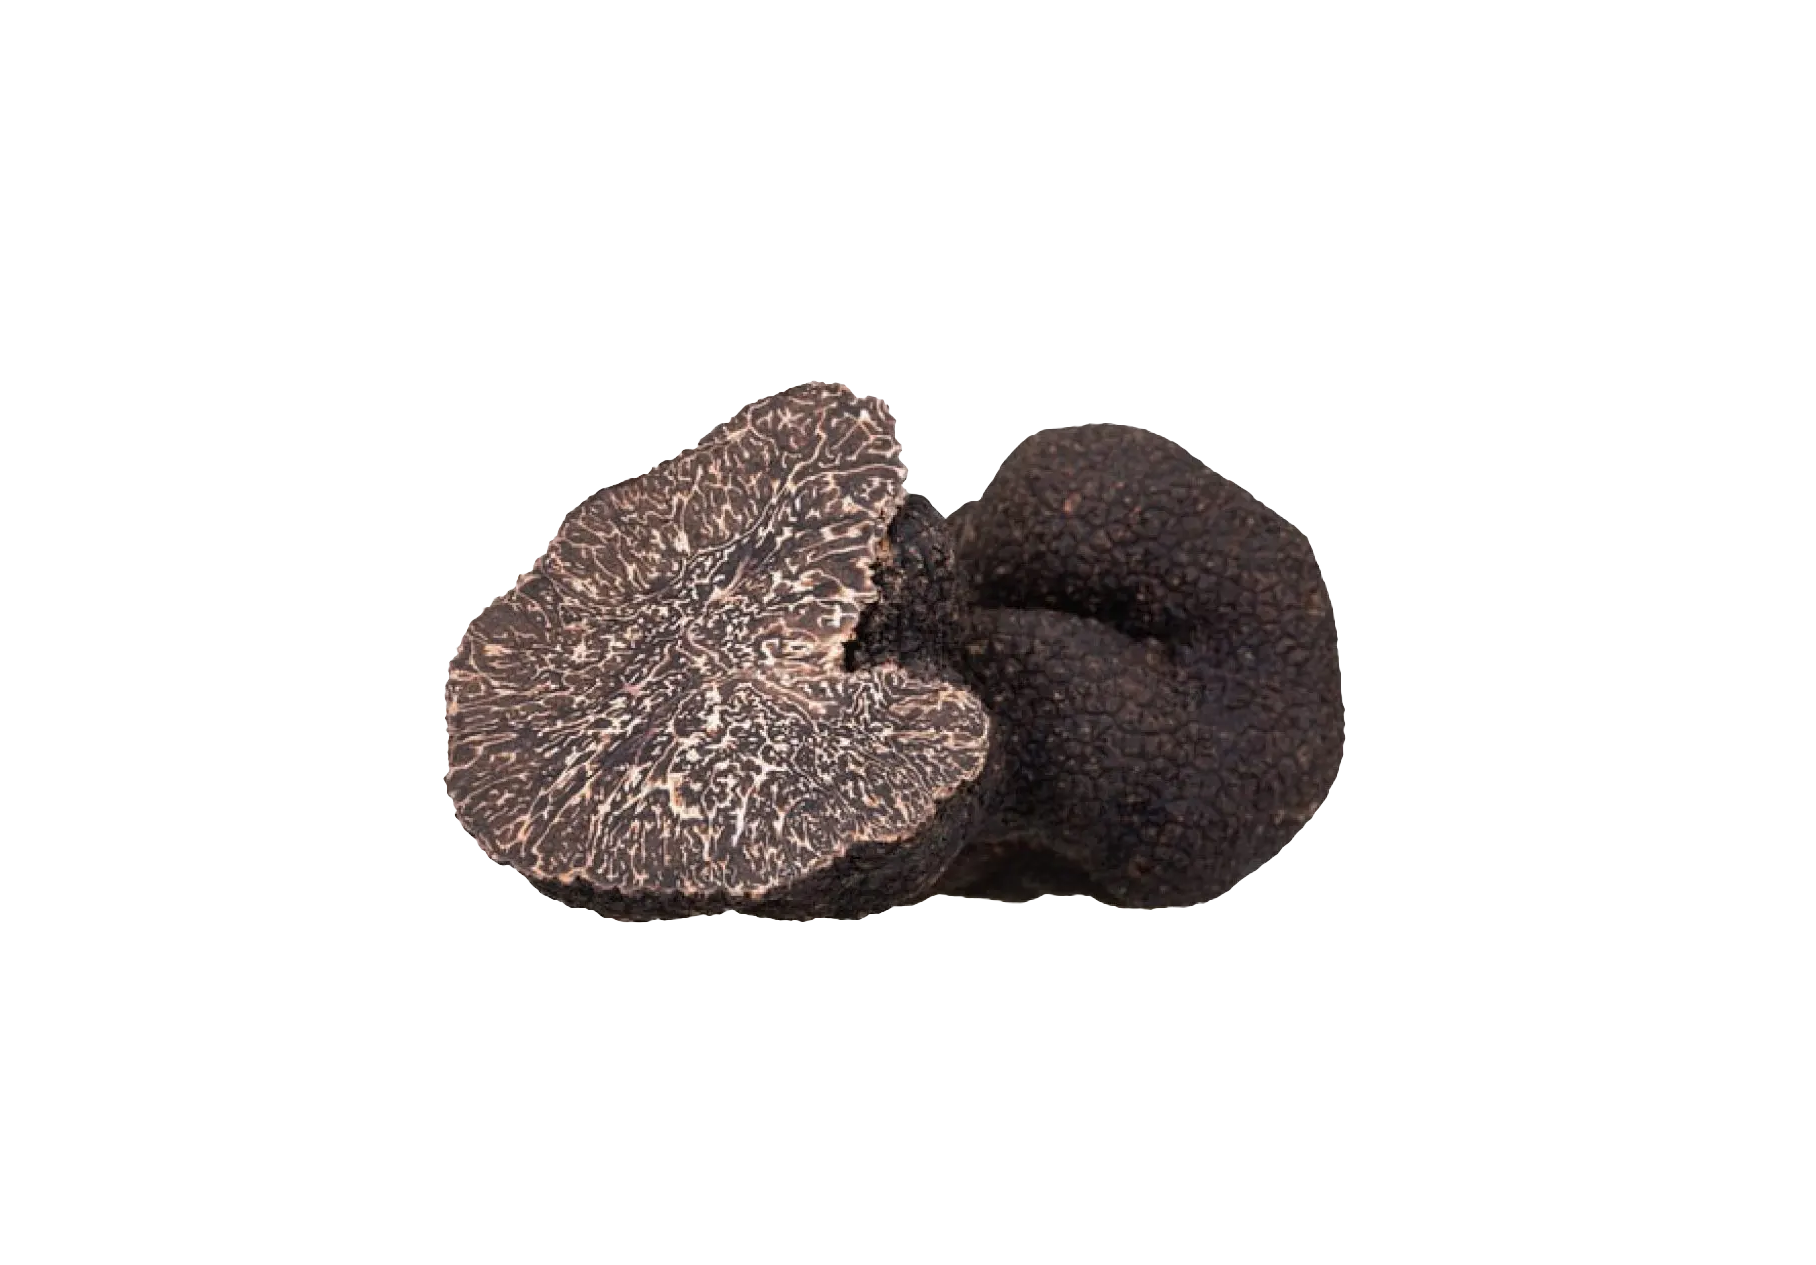 Truffe noire - Achat de tuber melanosporum fraiche